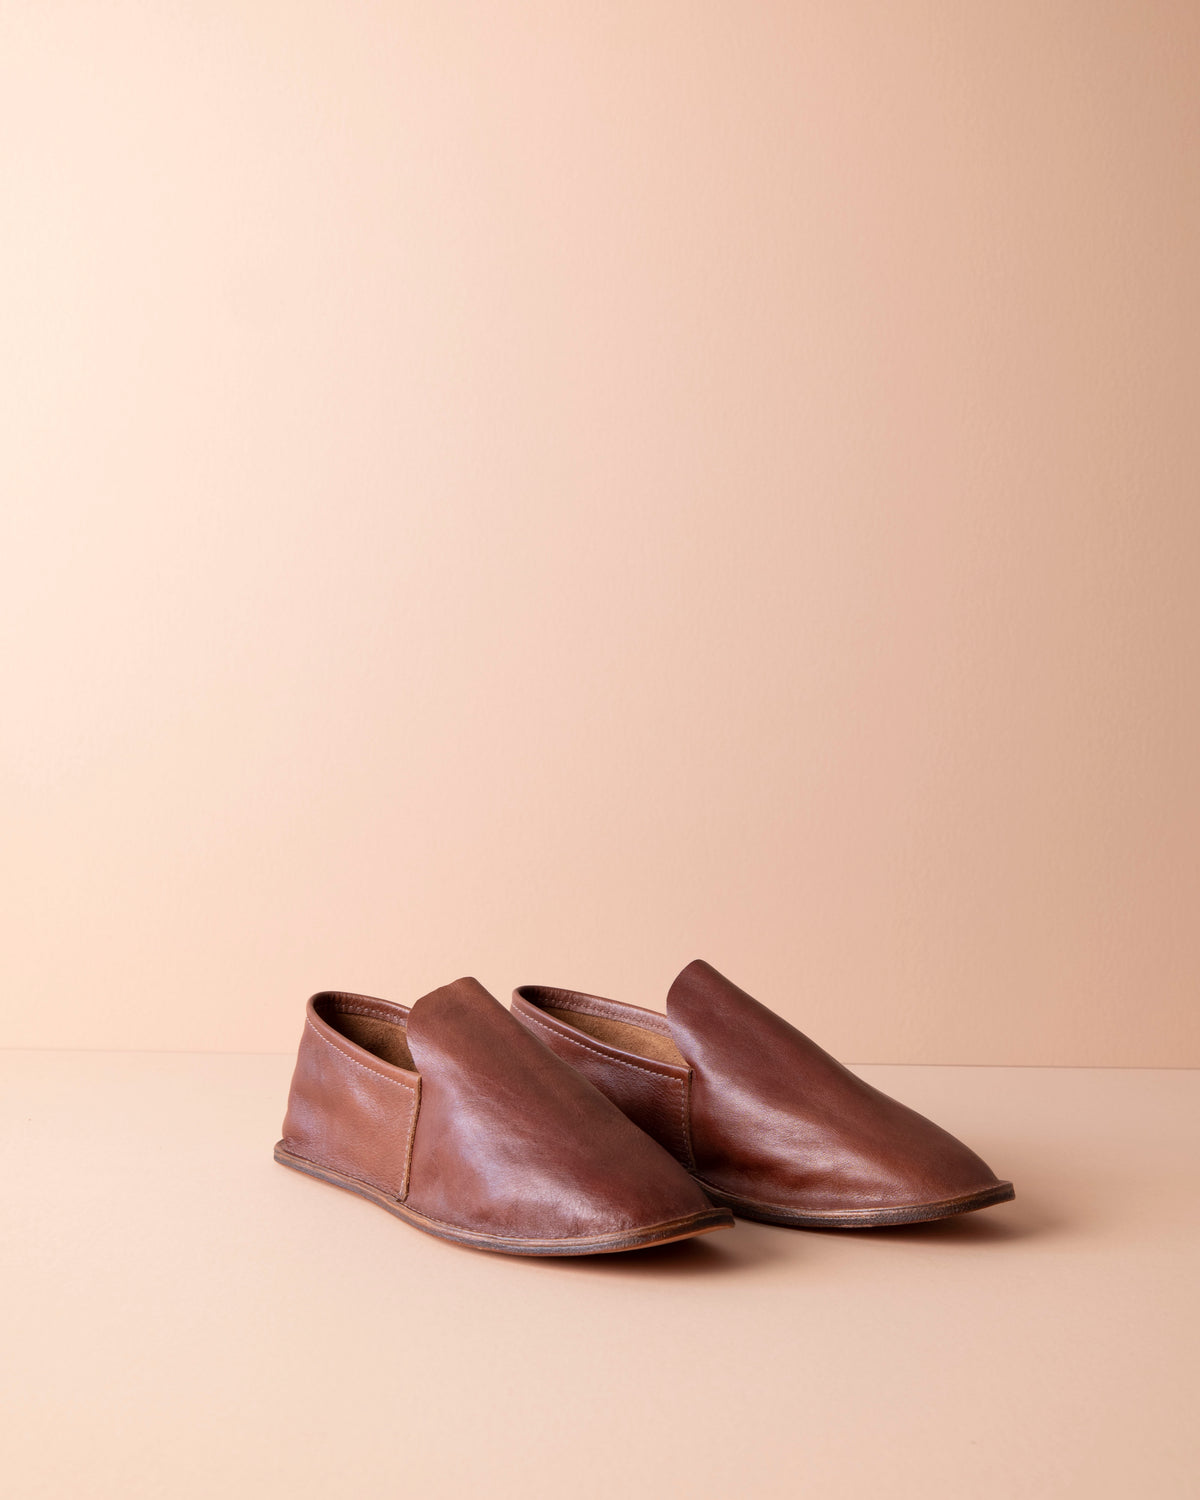 NOV】 Home Slippers for Men Winter Slip On Warm Shoes Non Slip Bedroom Soft  Plush House Slippers Flip Flop Indoor Shoes Male Footwear | Lazada.vn